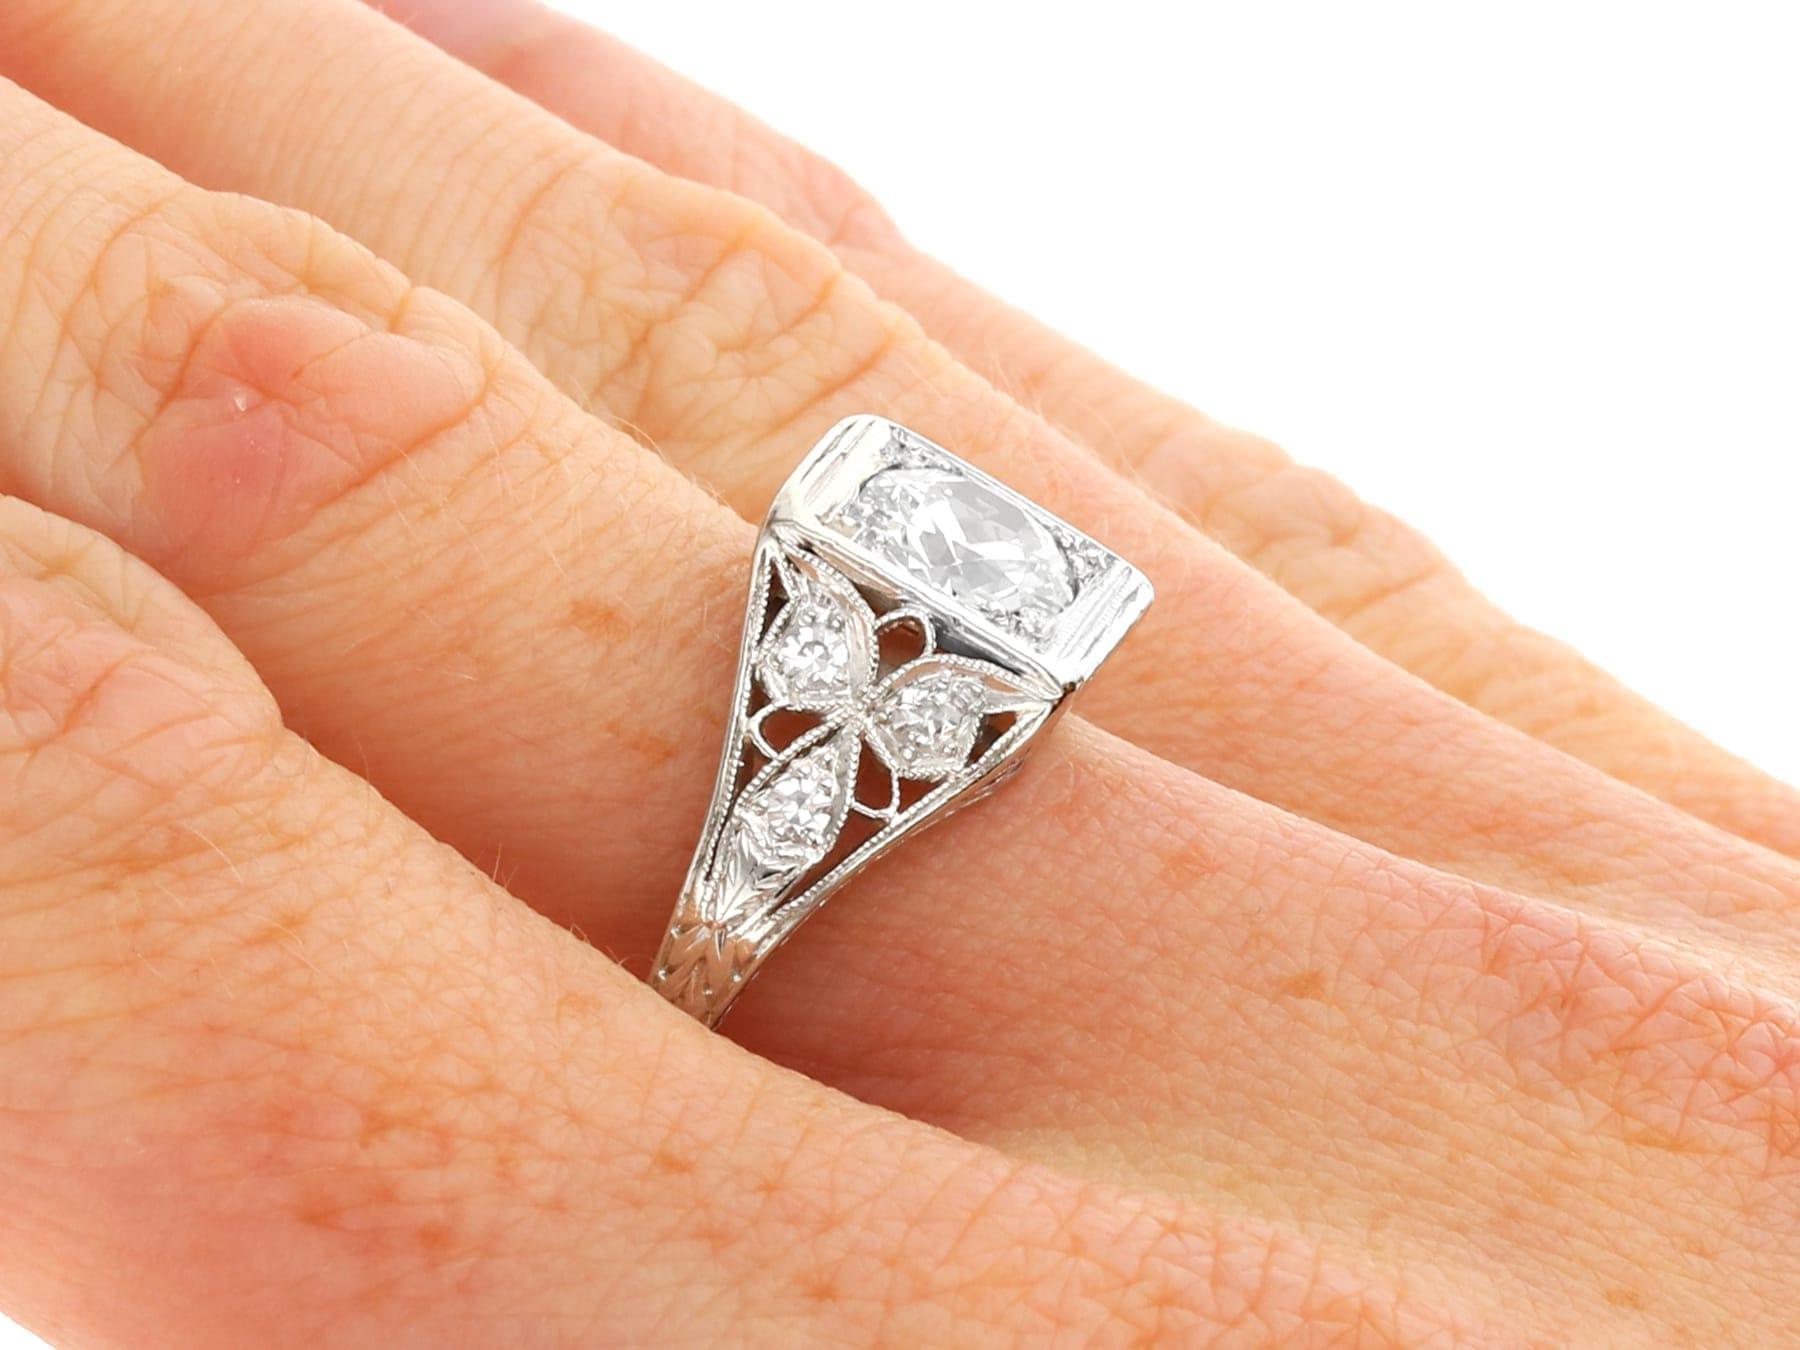 1900s Antique 1.14 Carat Diamond and Platinum Solitaire Ring For Sale 2